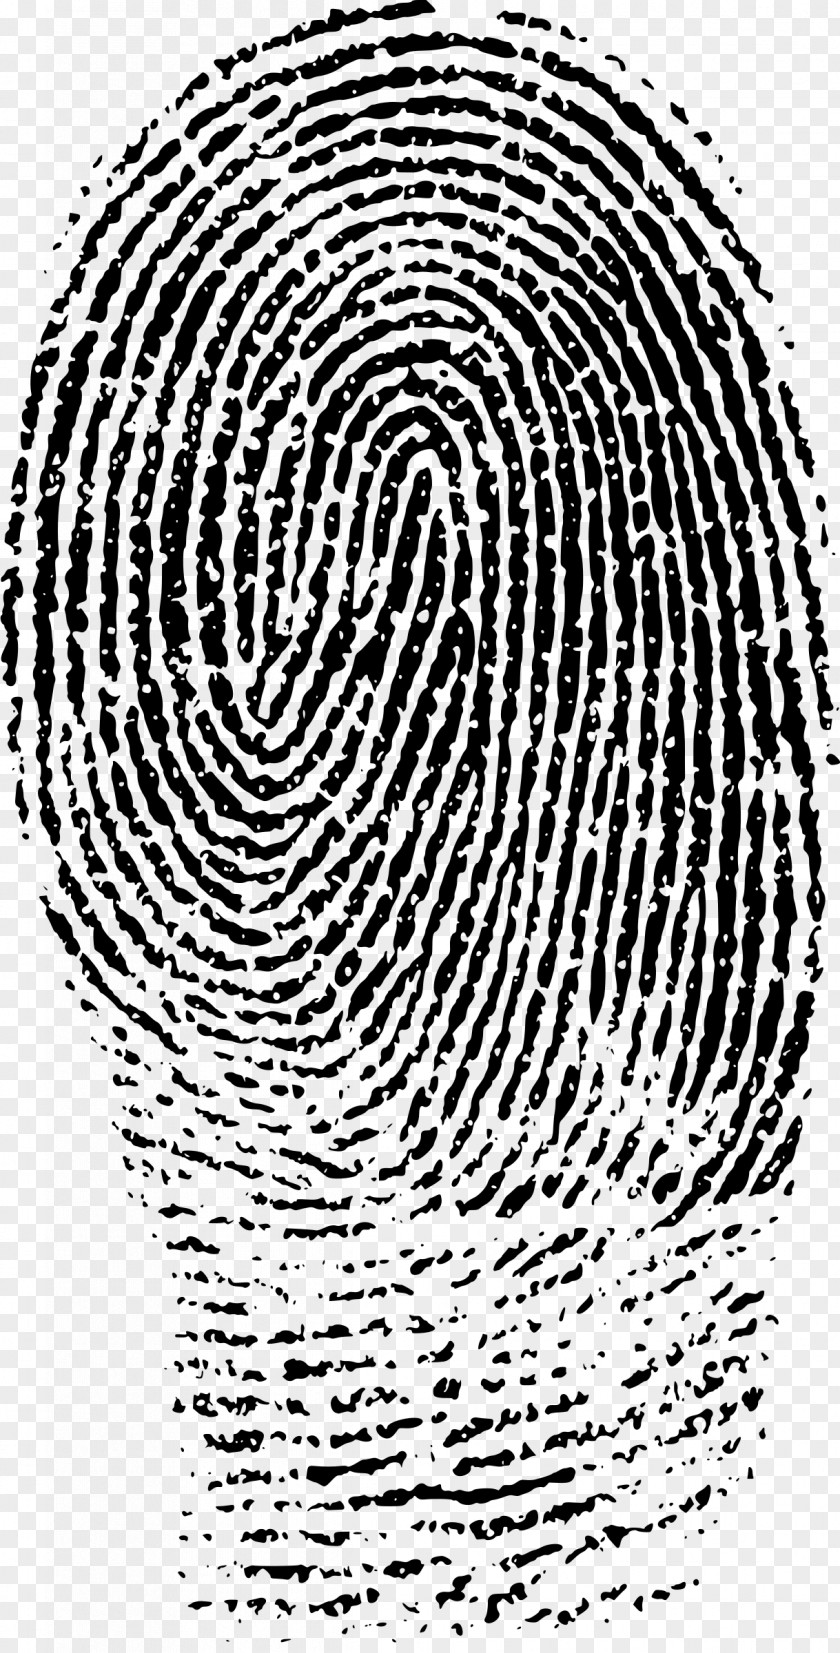 Finger Print Fingerprint Evidence Forensic Science Crime Scene PNG